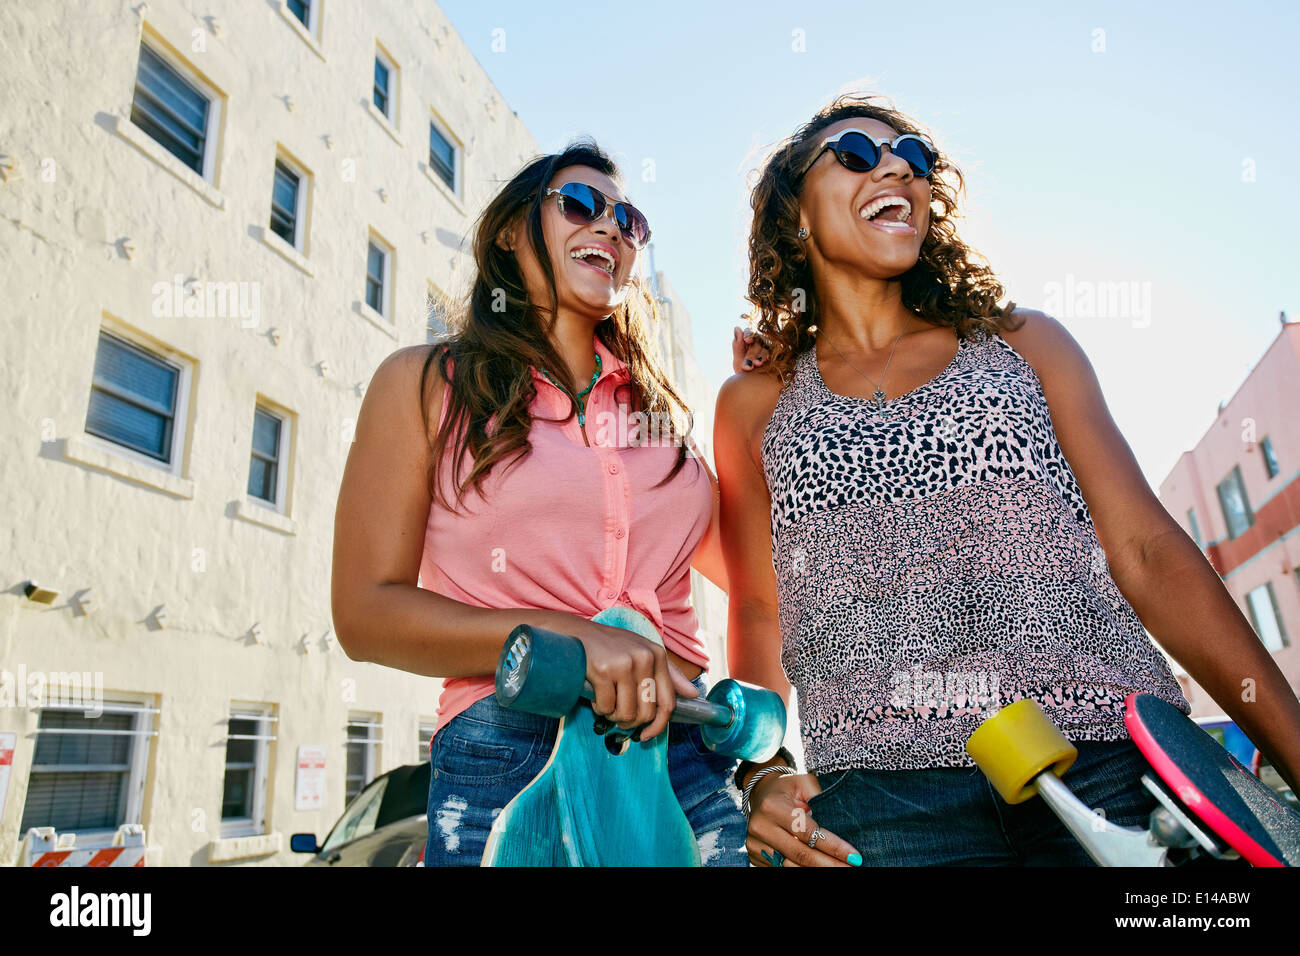 Women laughing on city street Stock Photo